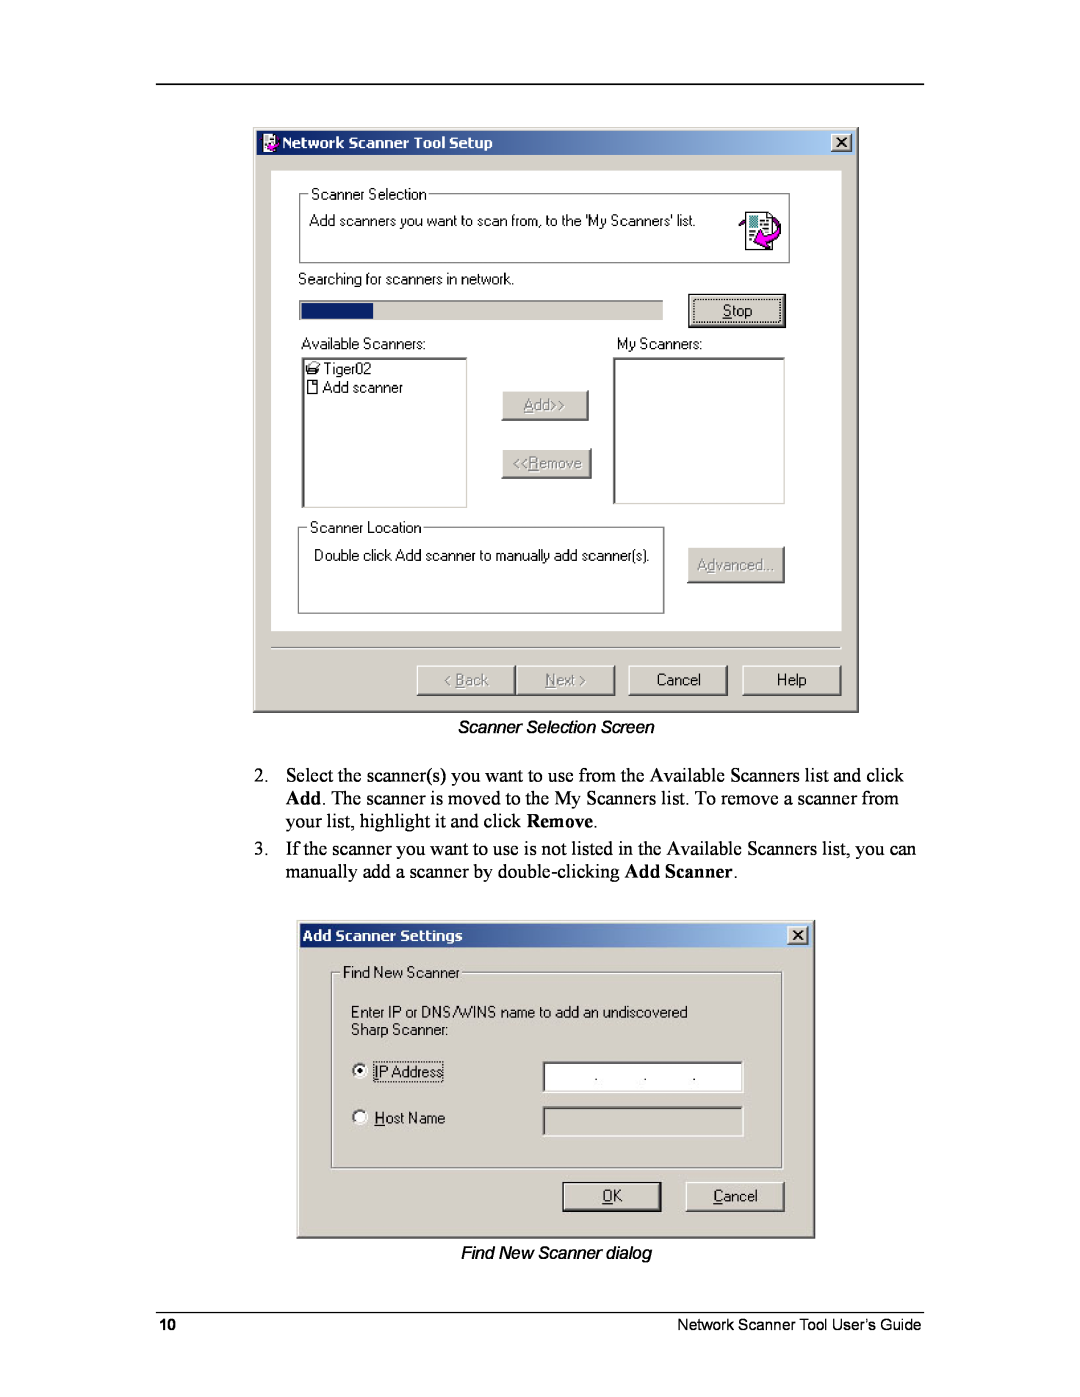 Sharp R3.1 manual Scanner Selection Screen, Find New Scanner dialog, Network Scanner Tool User’s Guide 